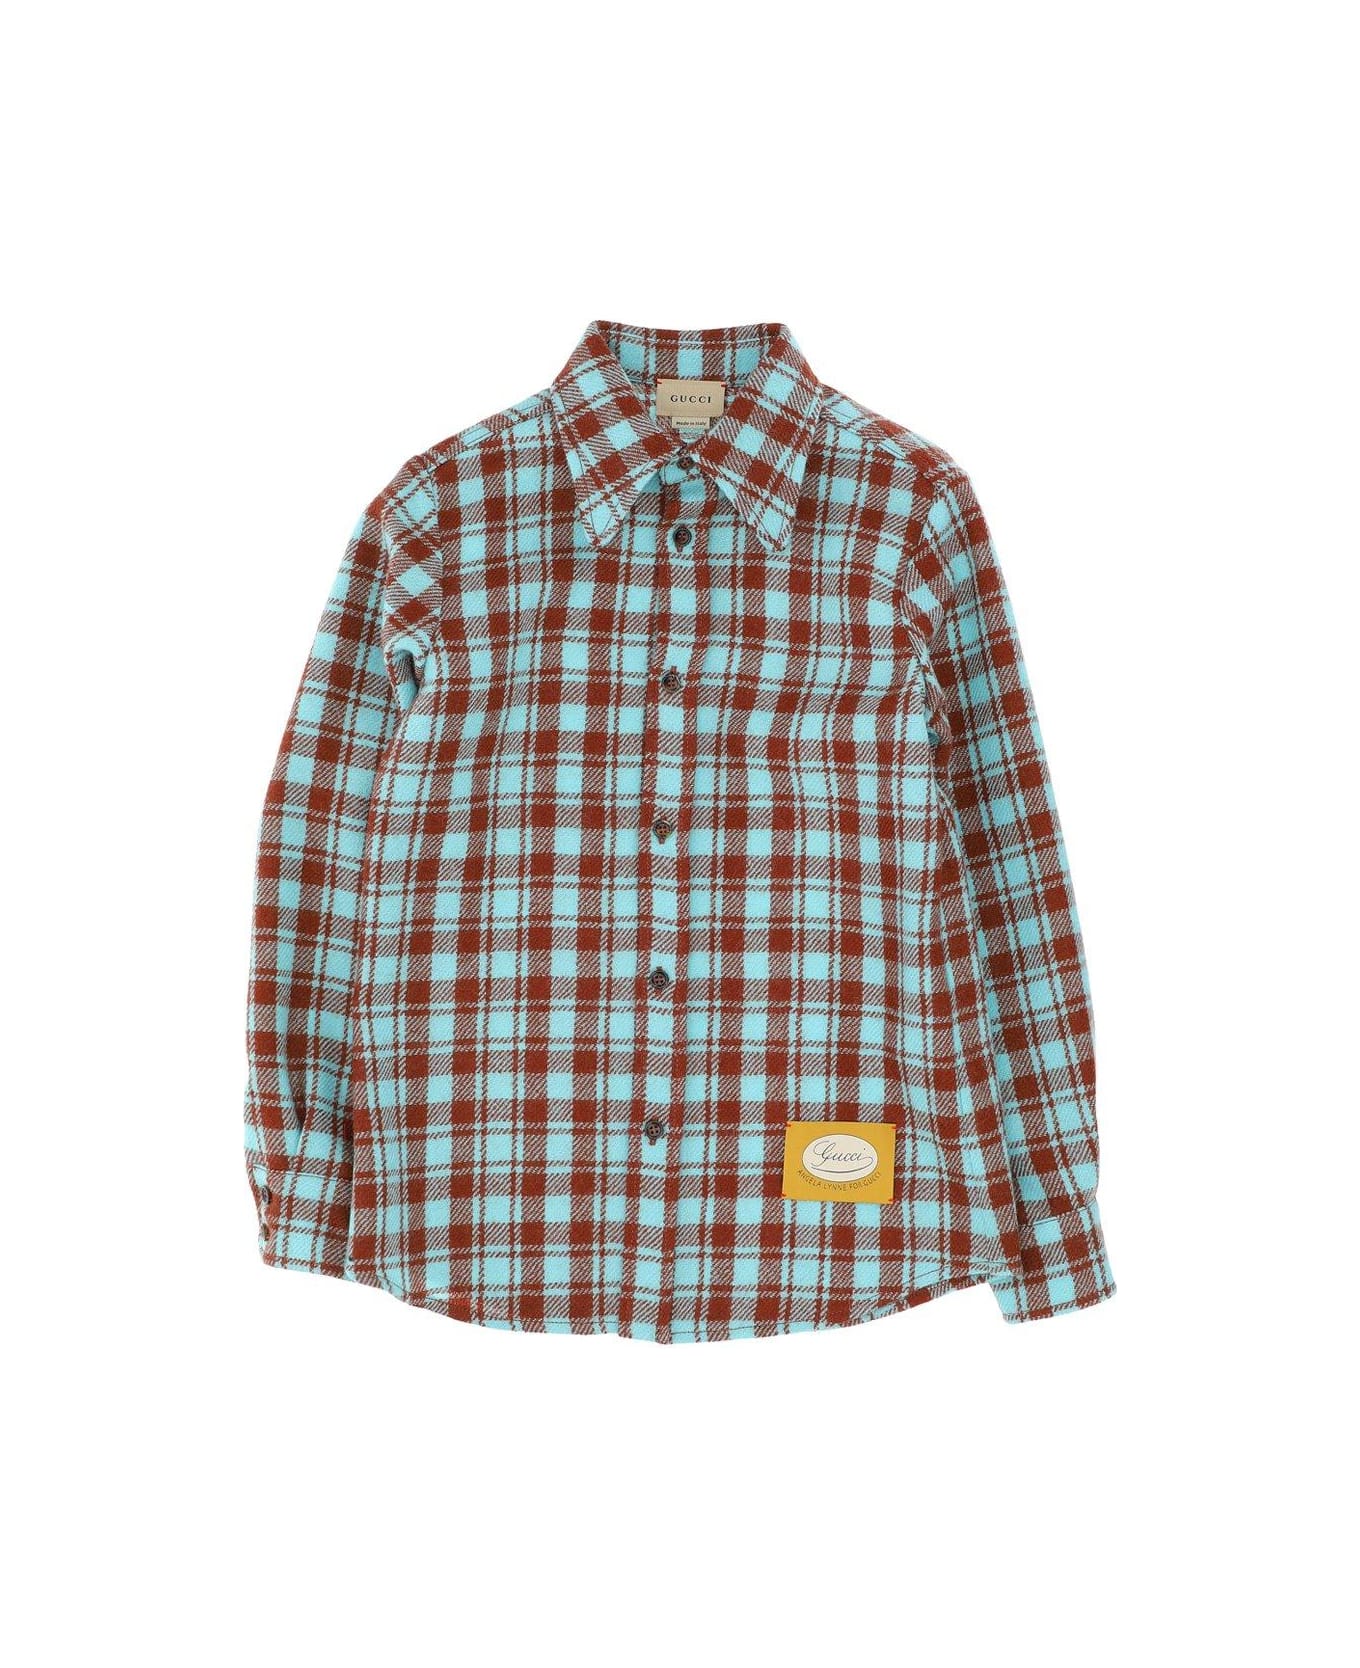 Gucci Plaid Pattern Long Sleeved Shirt シャツ